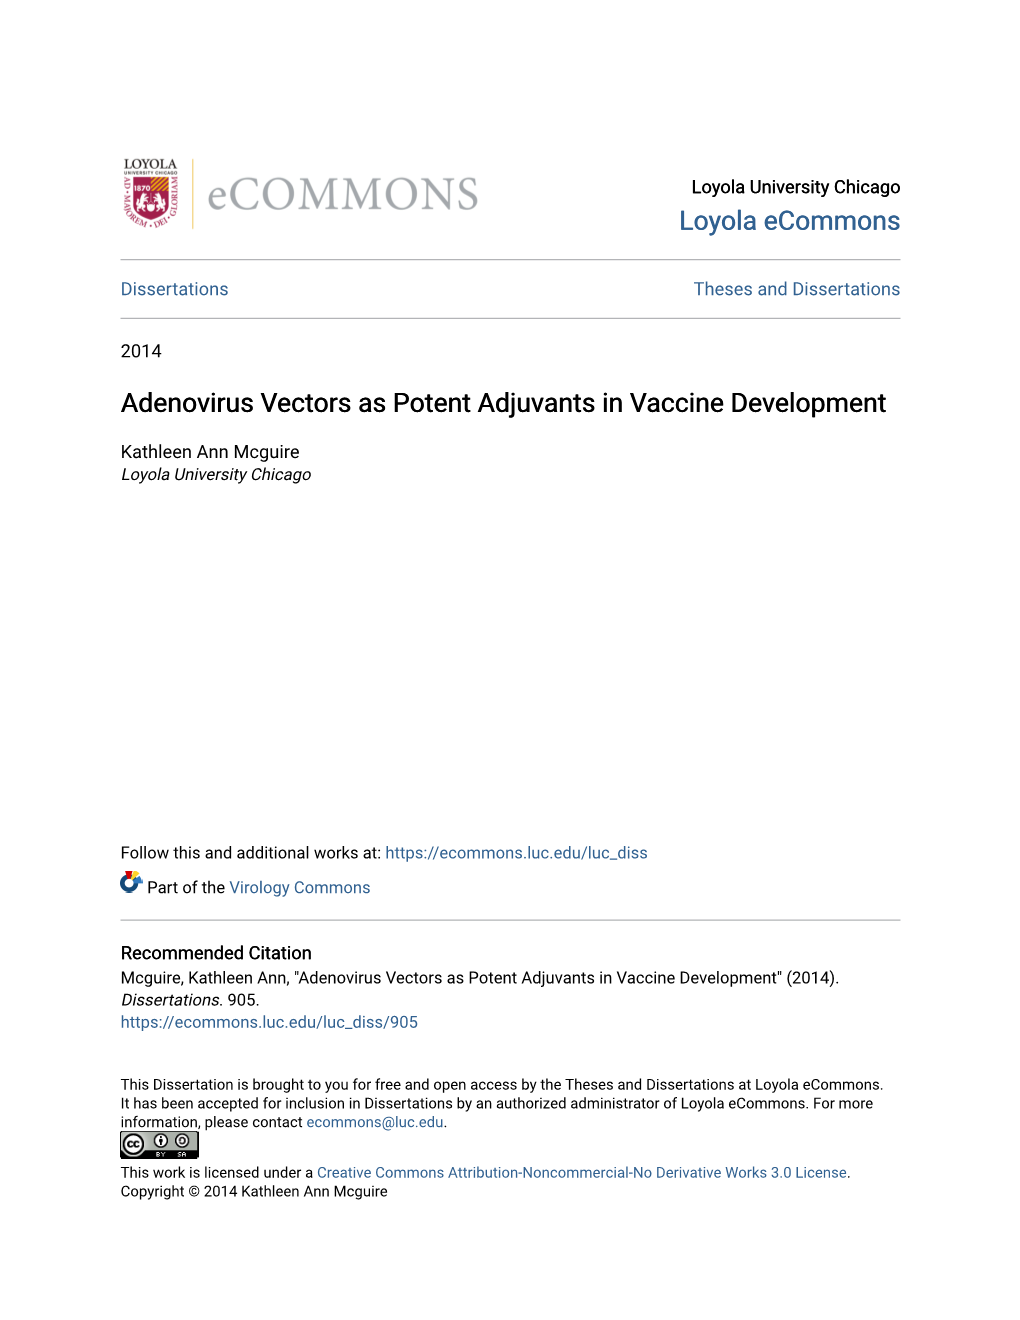 Adenovirus Vectors As Potent Adjuvants in Vaccine Development